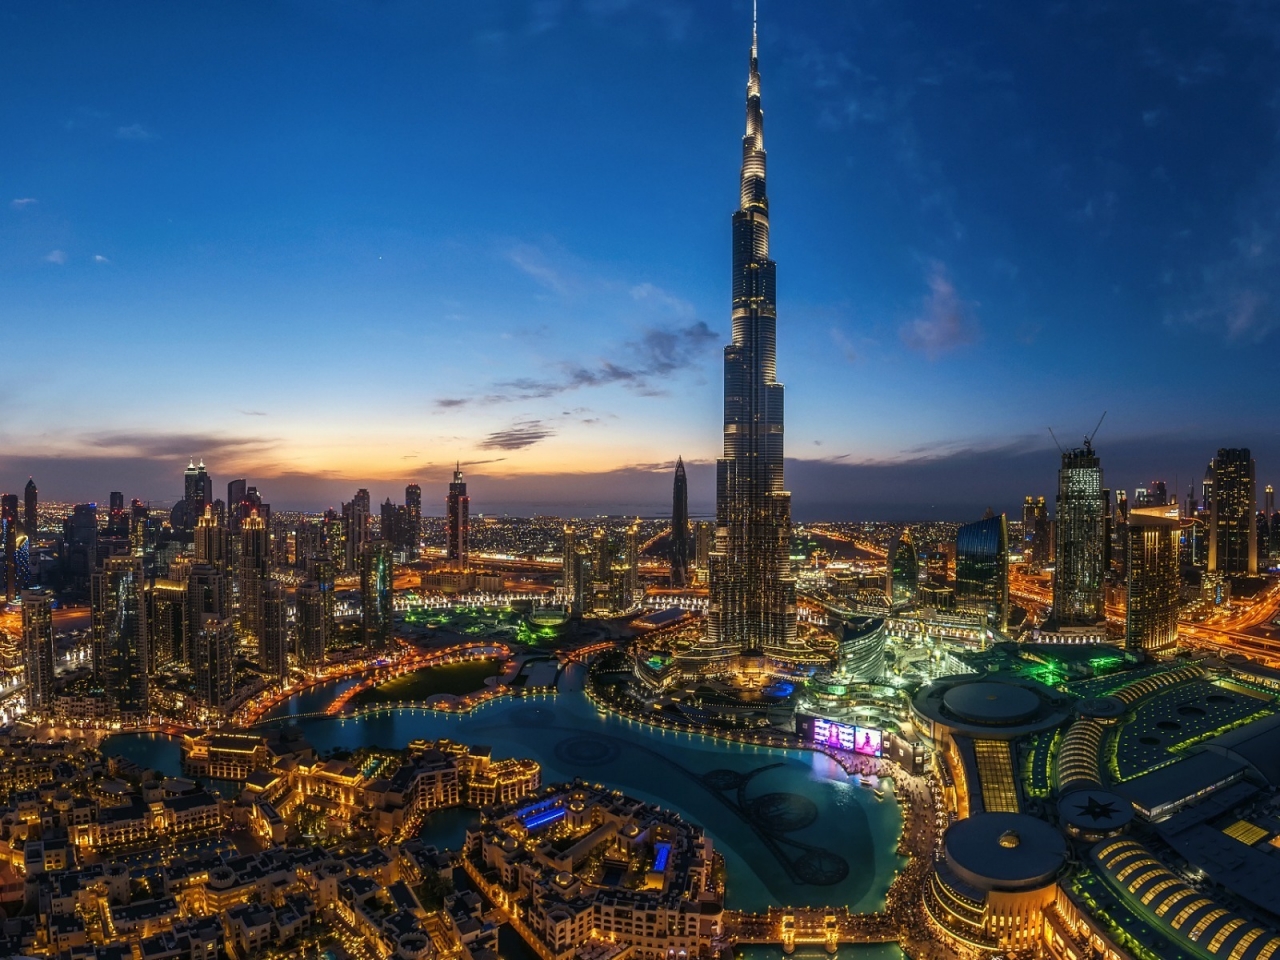 Night Lights in Dubai for 1280 x 960 resolution